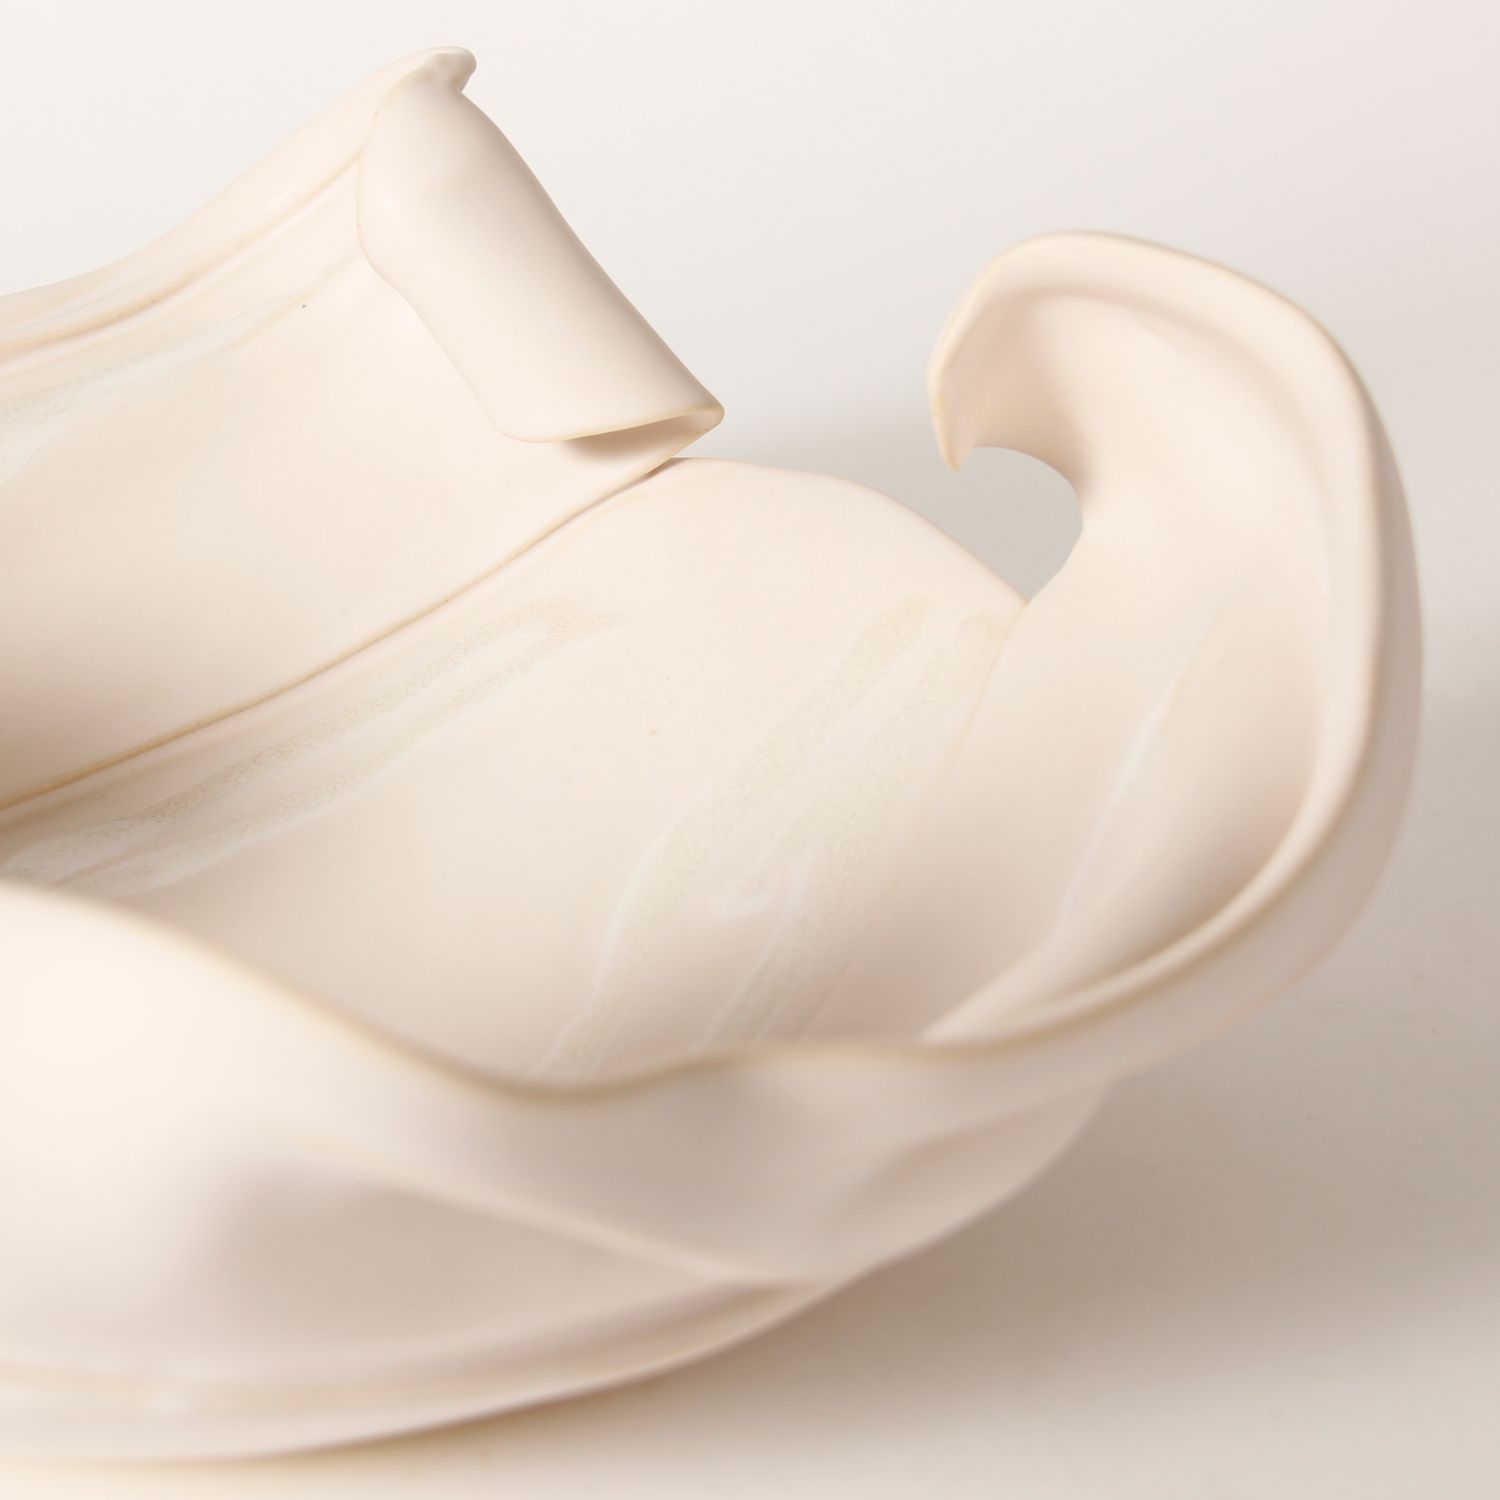 Nancy Macnaughton Hilborn: Curly Bowl Product Image 2 of 5